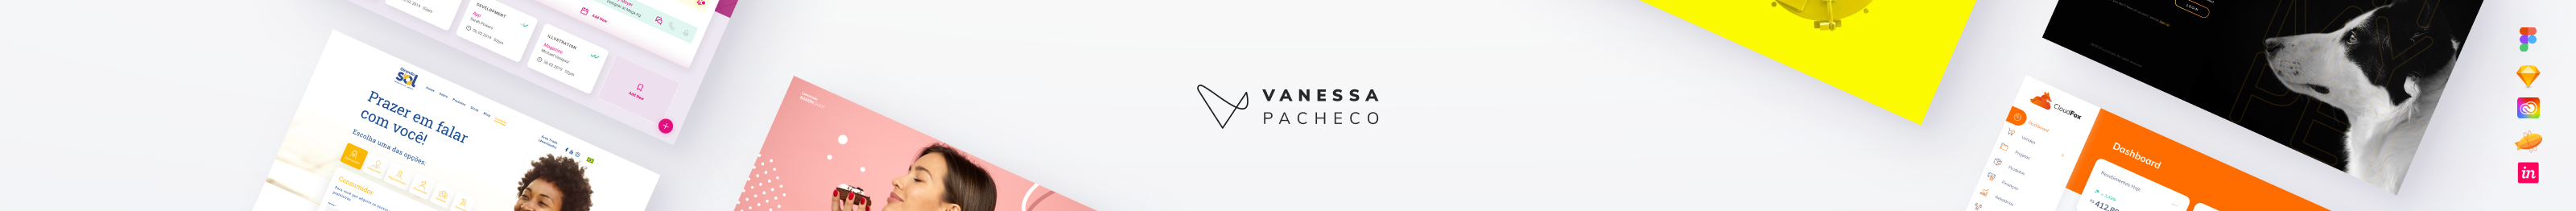 Banner de perfil de Vanessa Pacheco